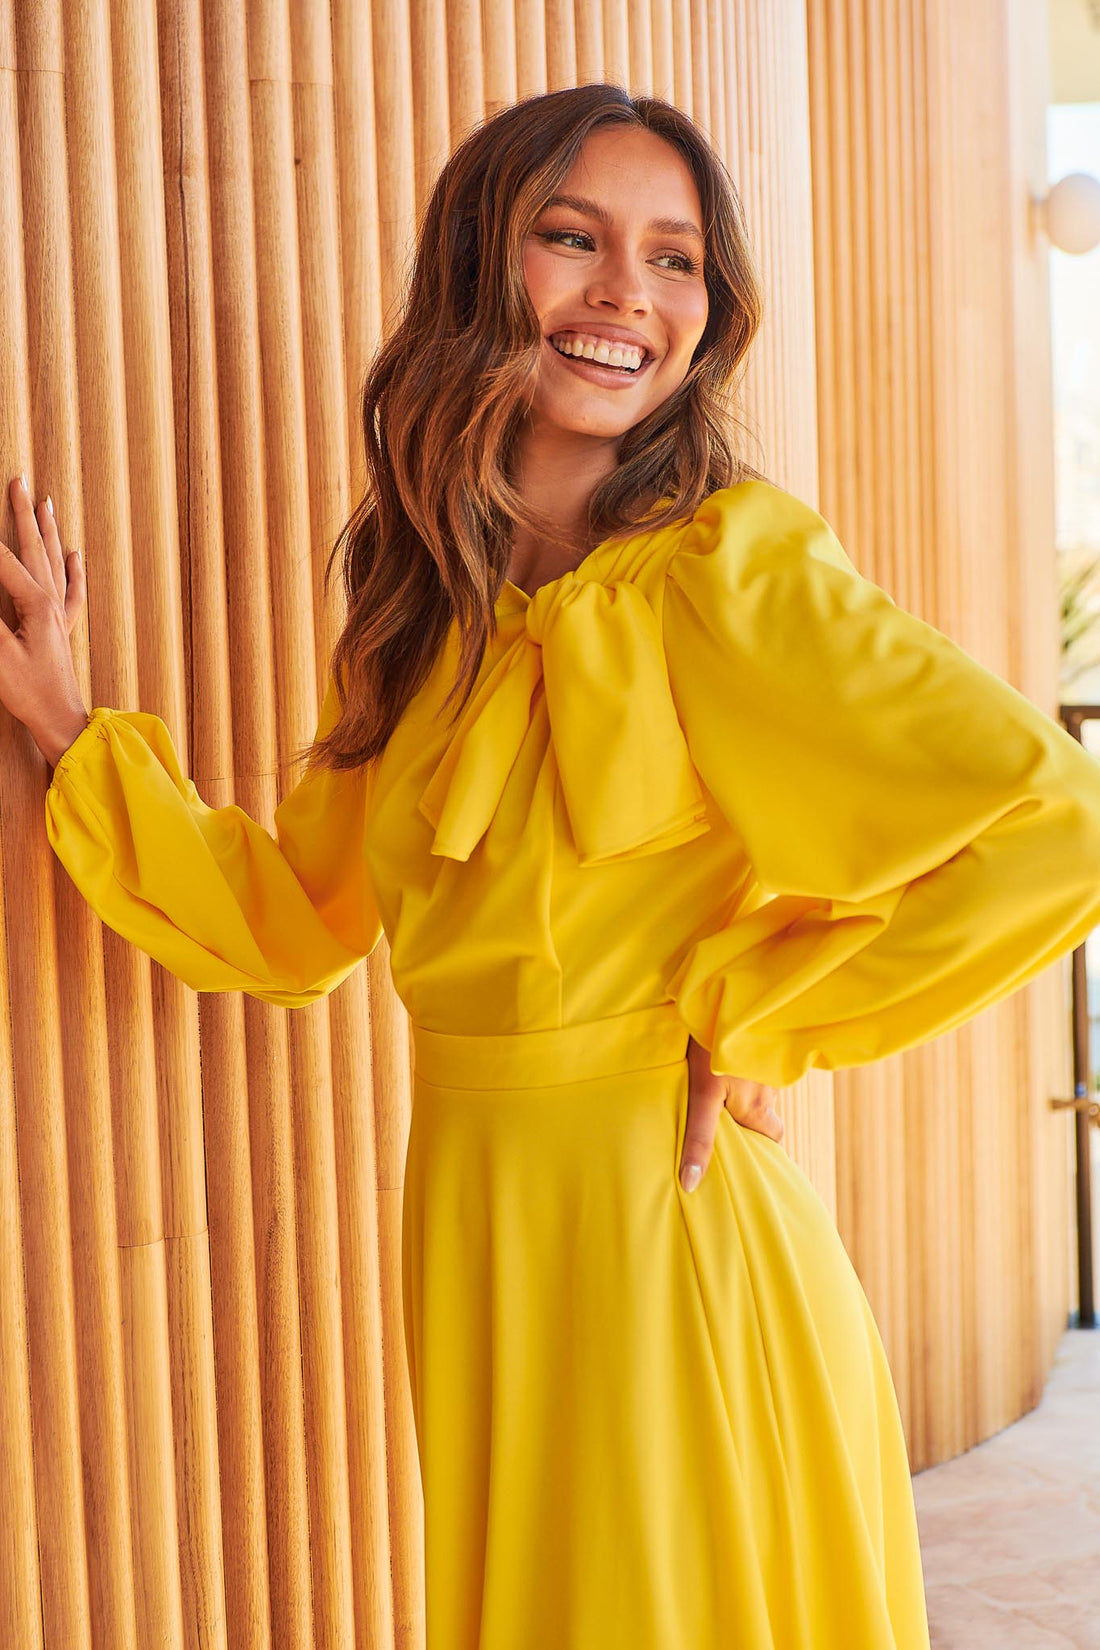 Kate Bow Shoulder Dress - Yellow - FINAL SALE